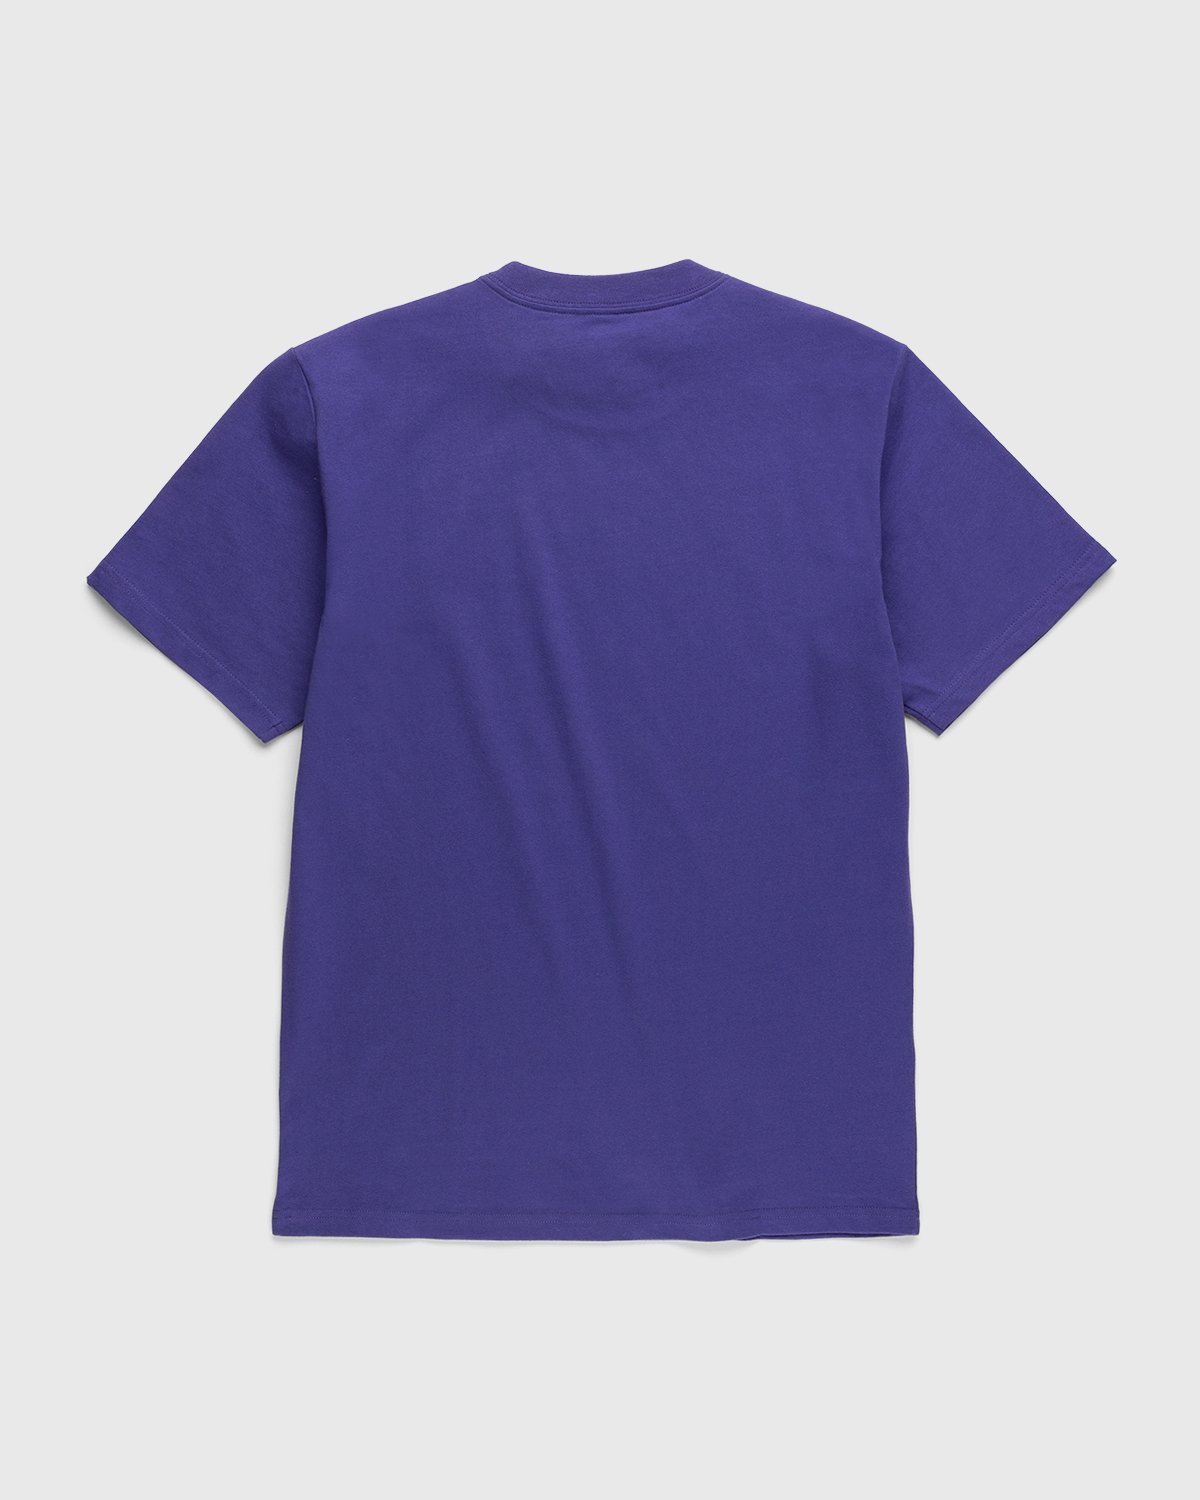 Carhartt WIP - University Script T-Shirt Razzmic White - Clothing - Purple - Image 2